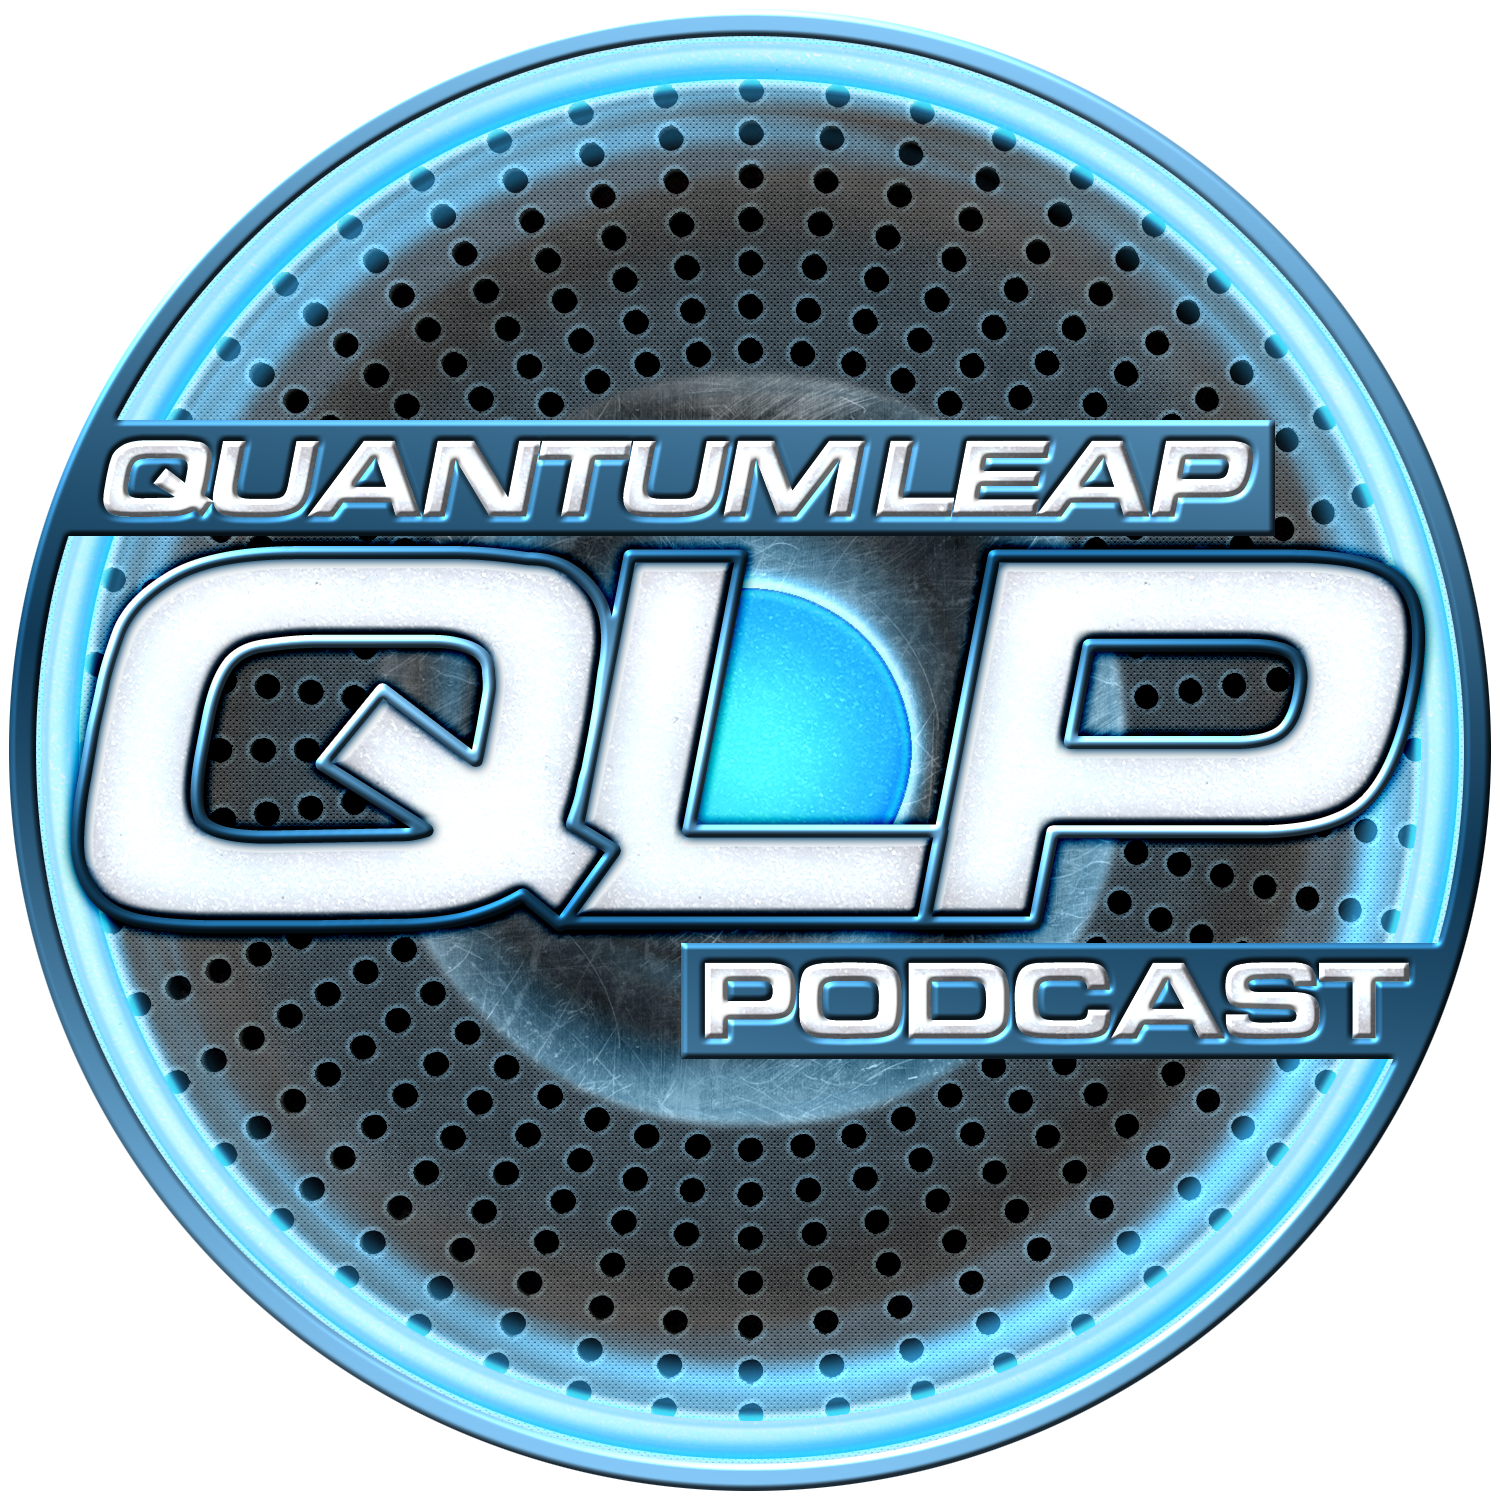 The Quantum Leap Podcast